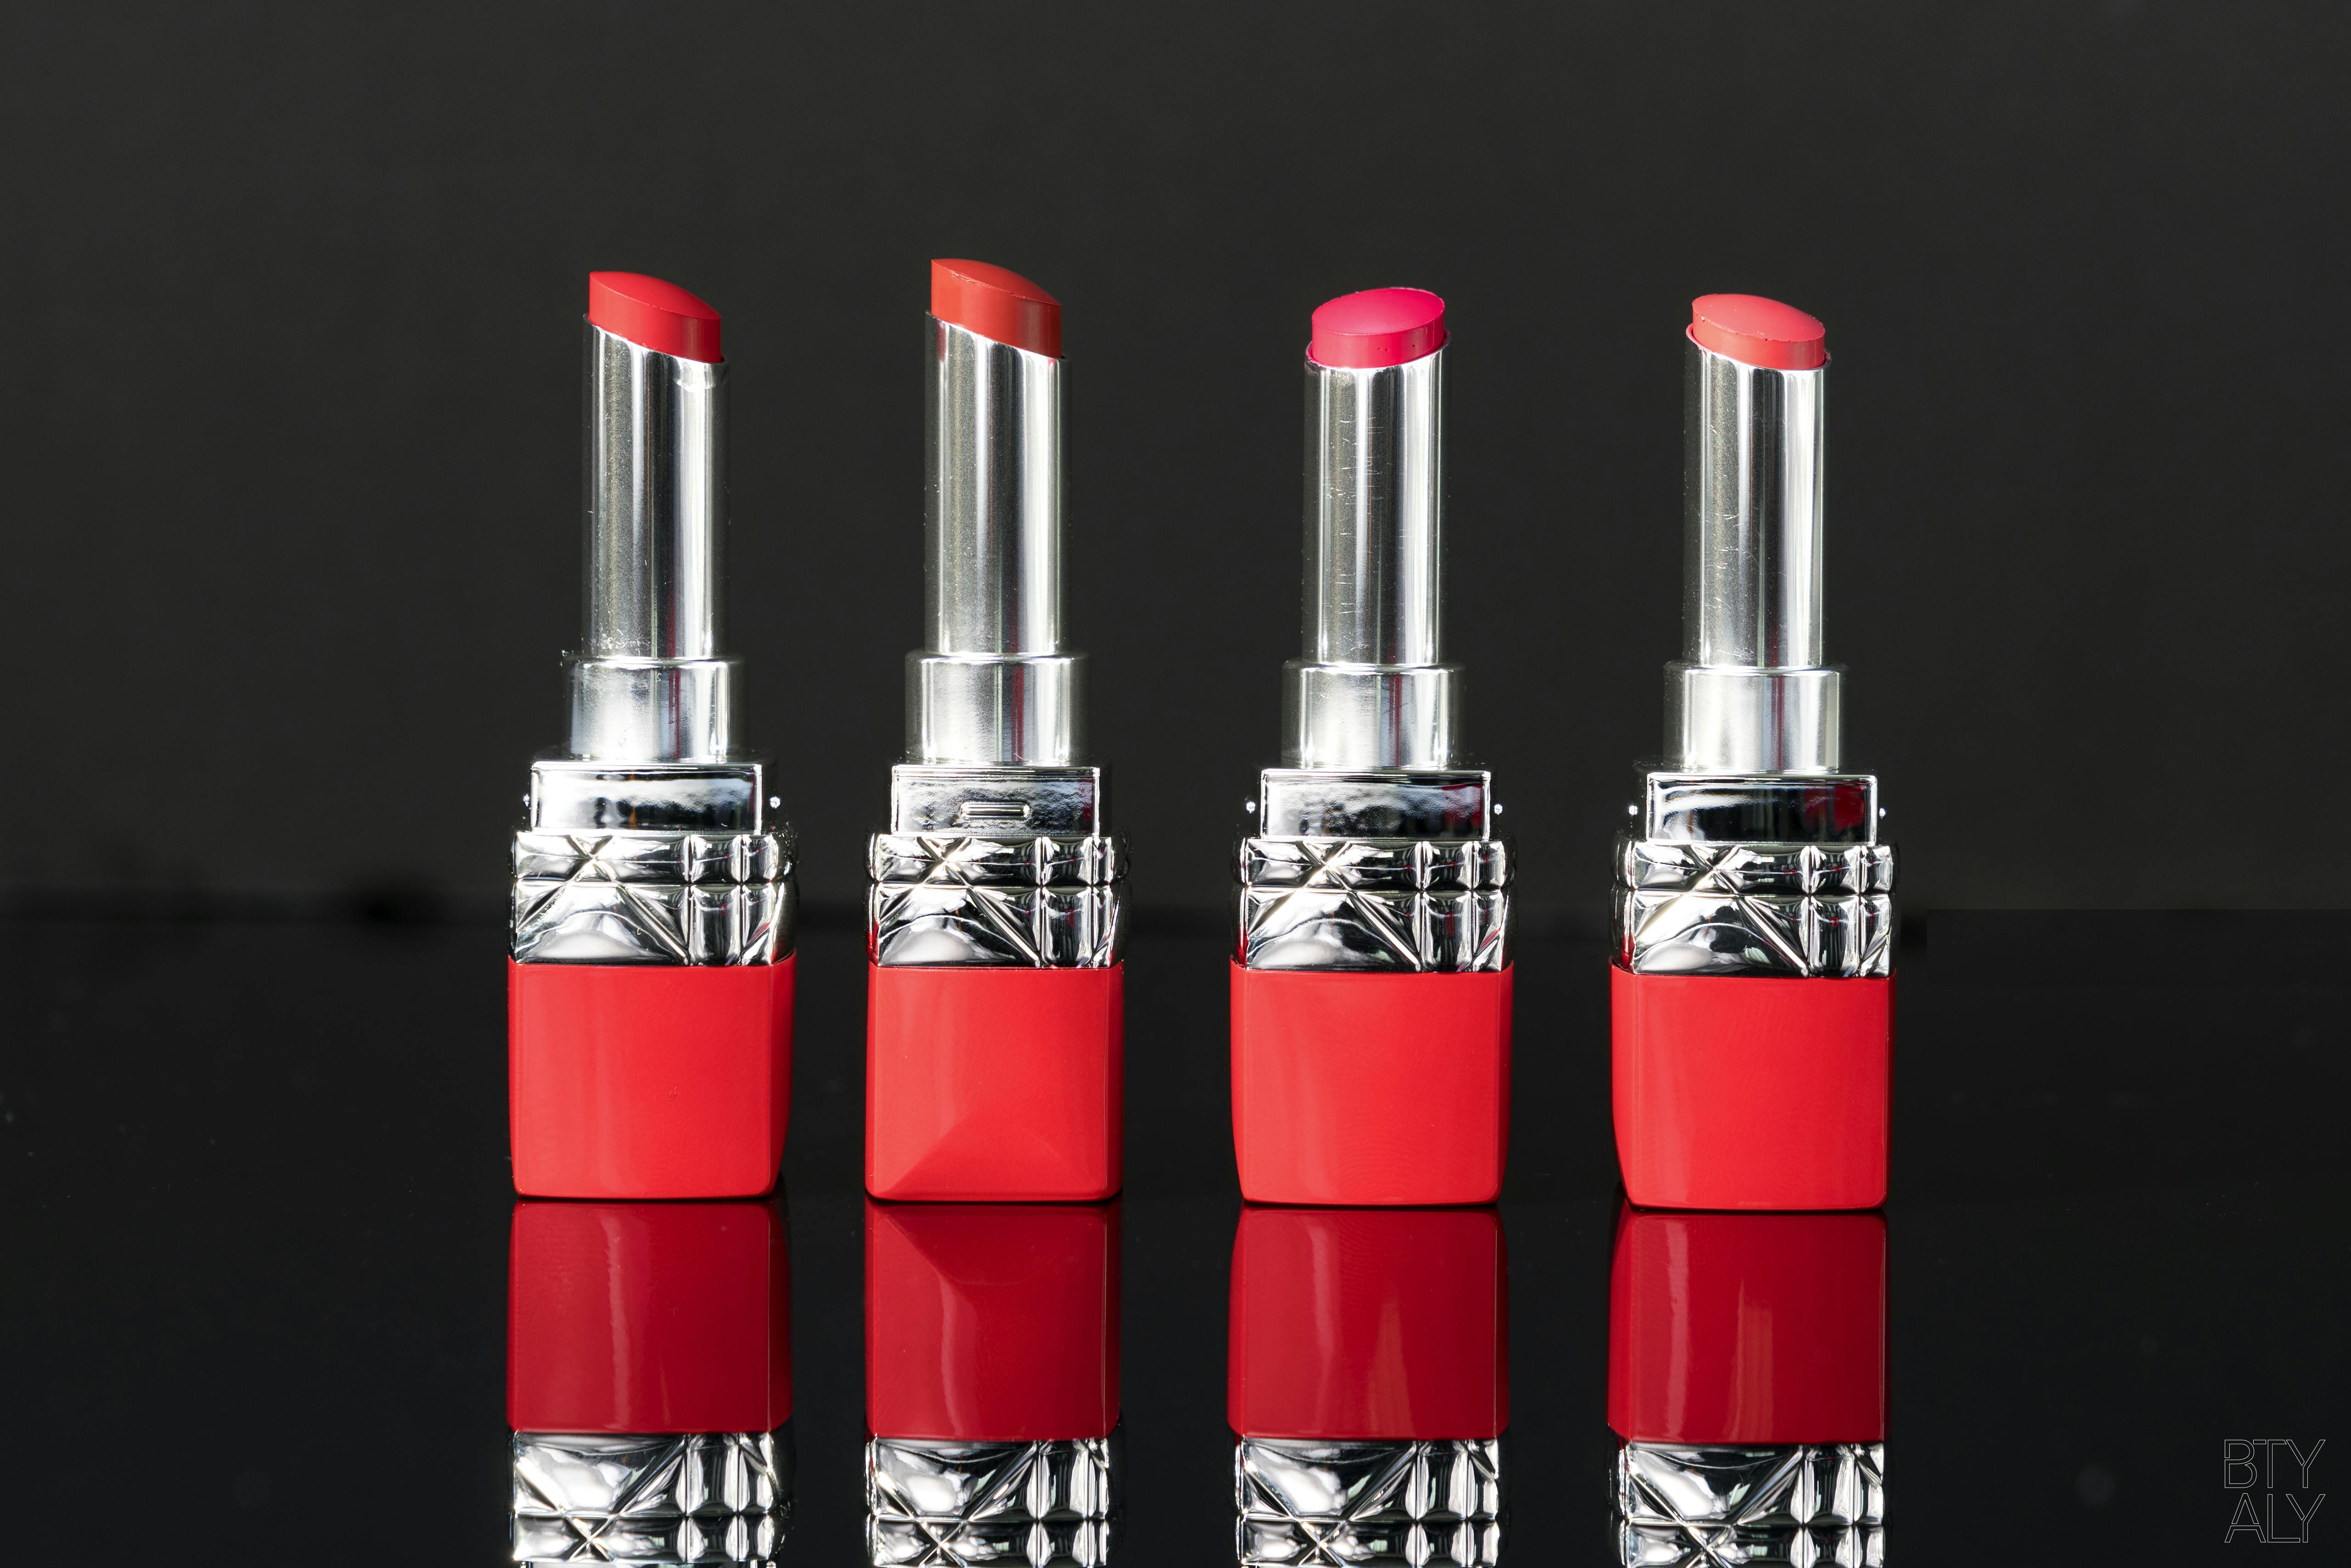 Rouge Dior Ultra Rouge Lipsticks 555, 641, 763, 999